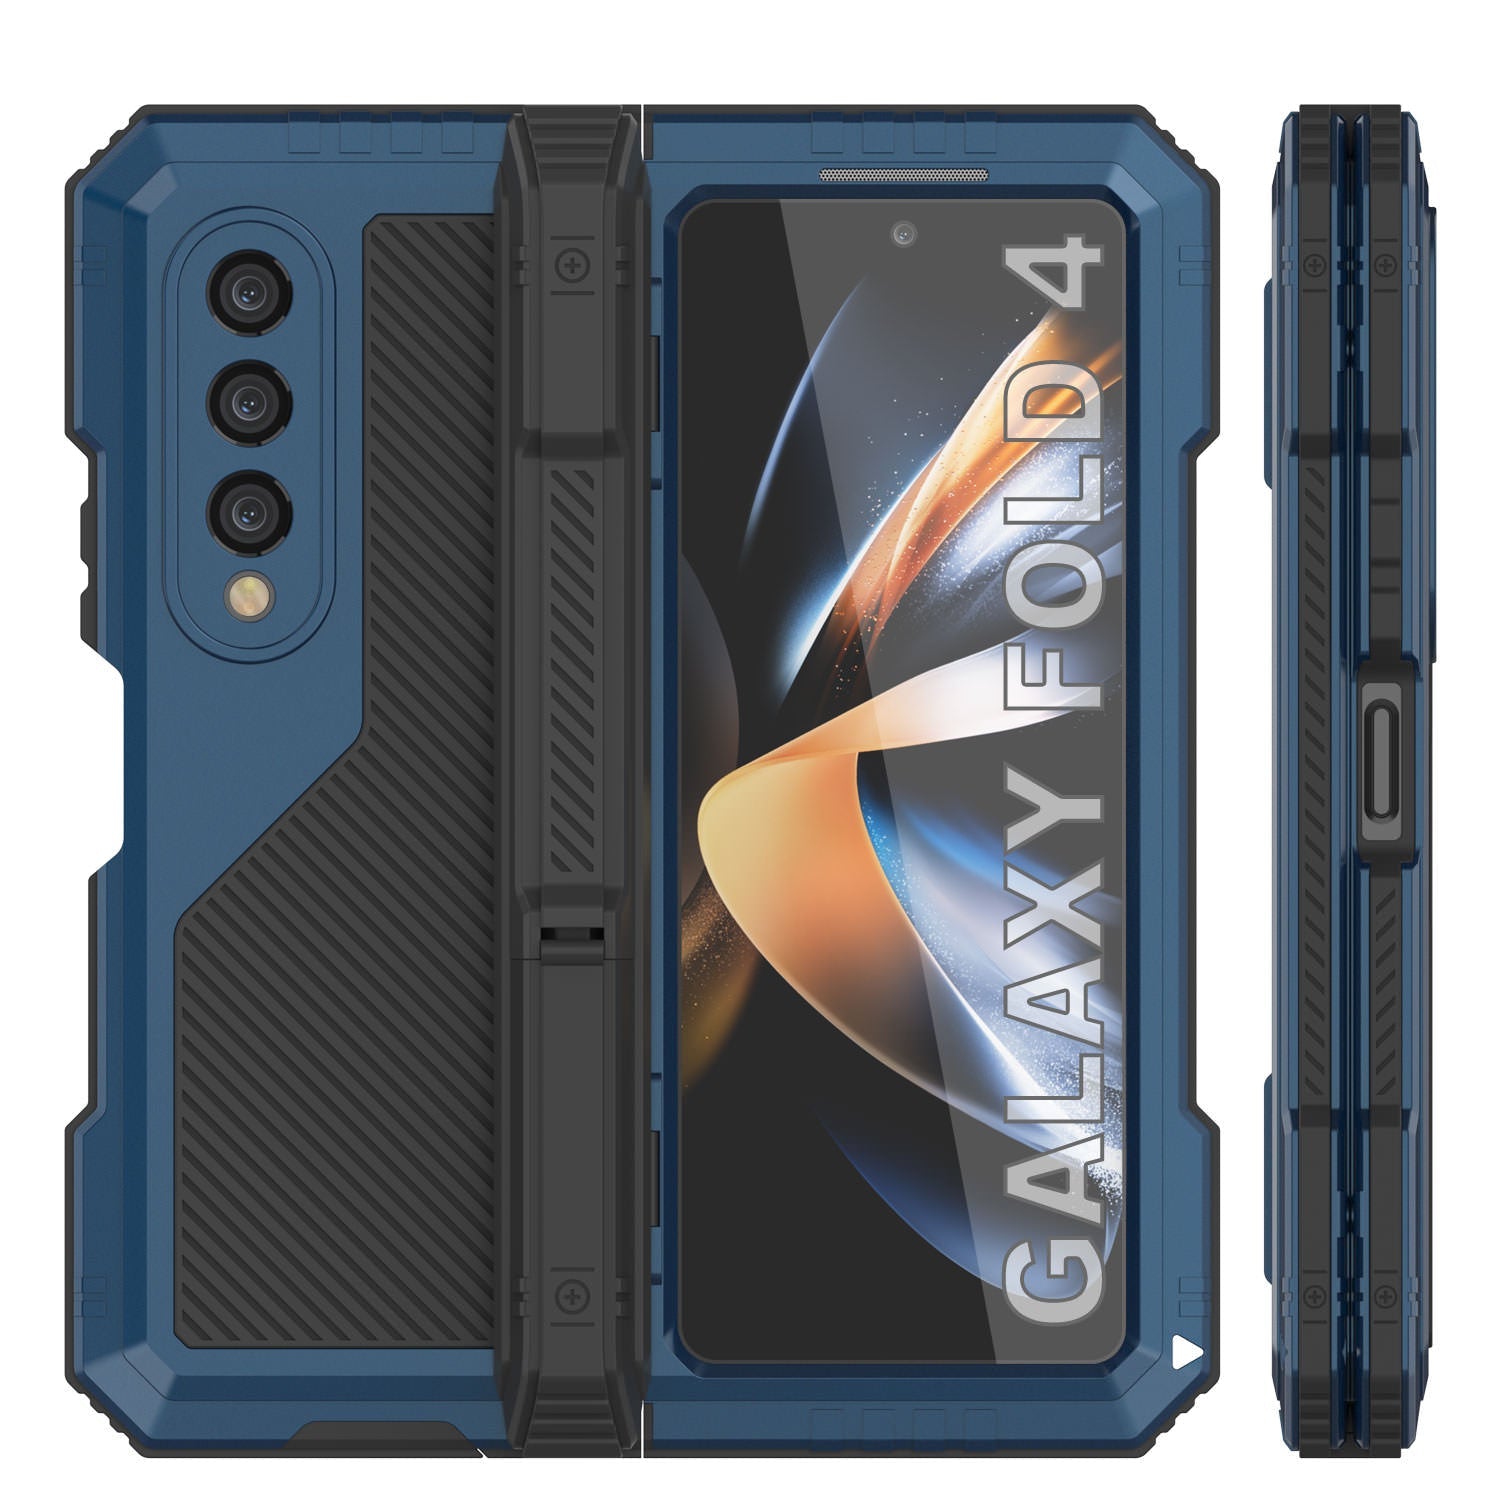 Galaxy Z Fold4 Metal Case, Heavy Duty Military Grade Armor Cover Full Body Hard [Blue]